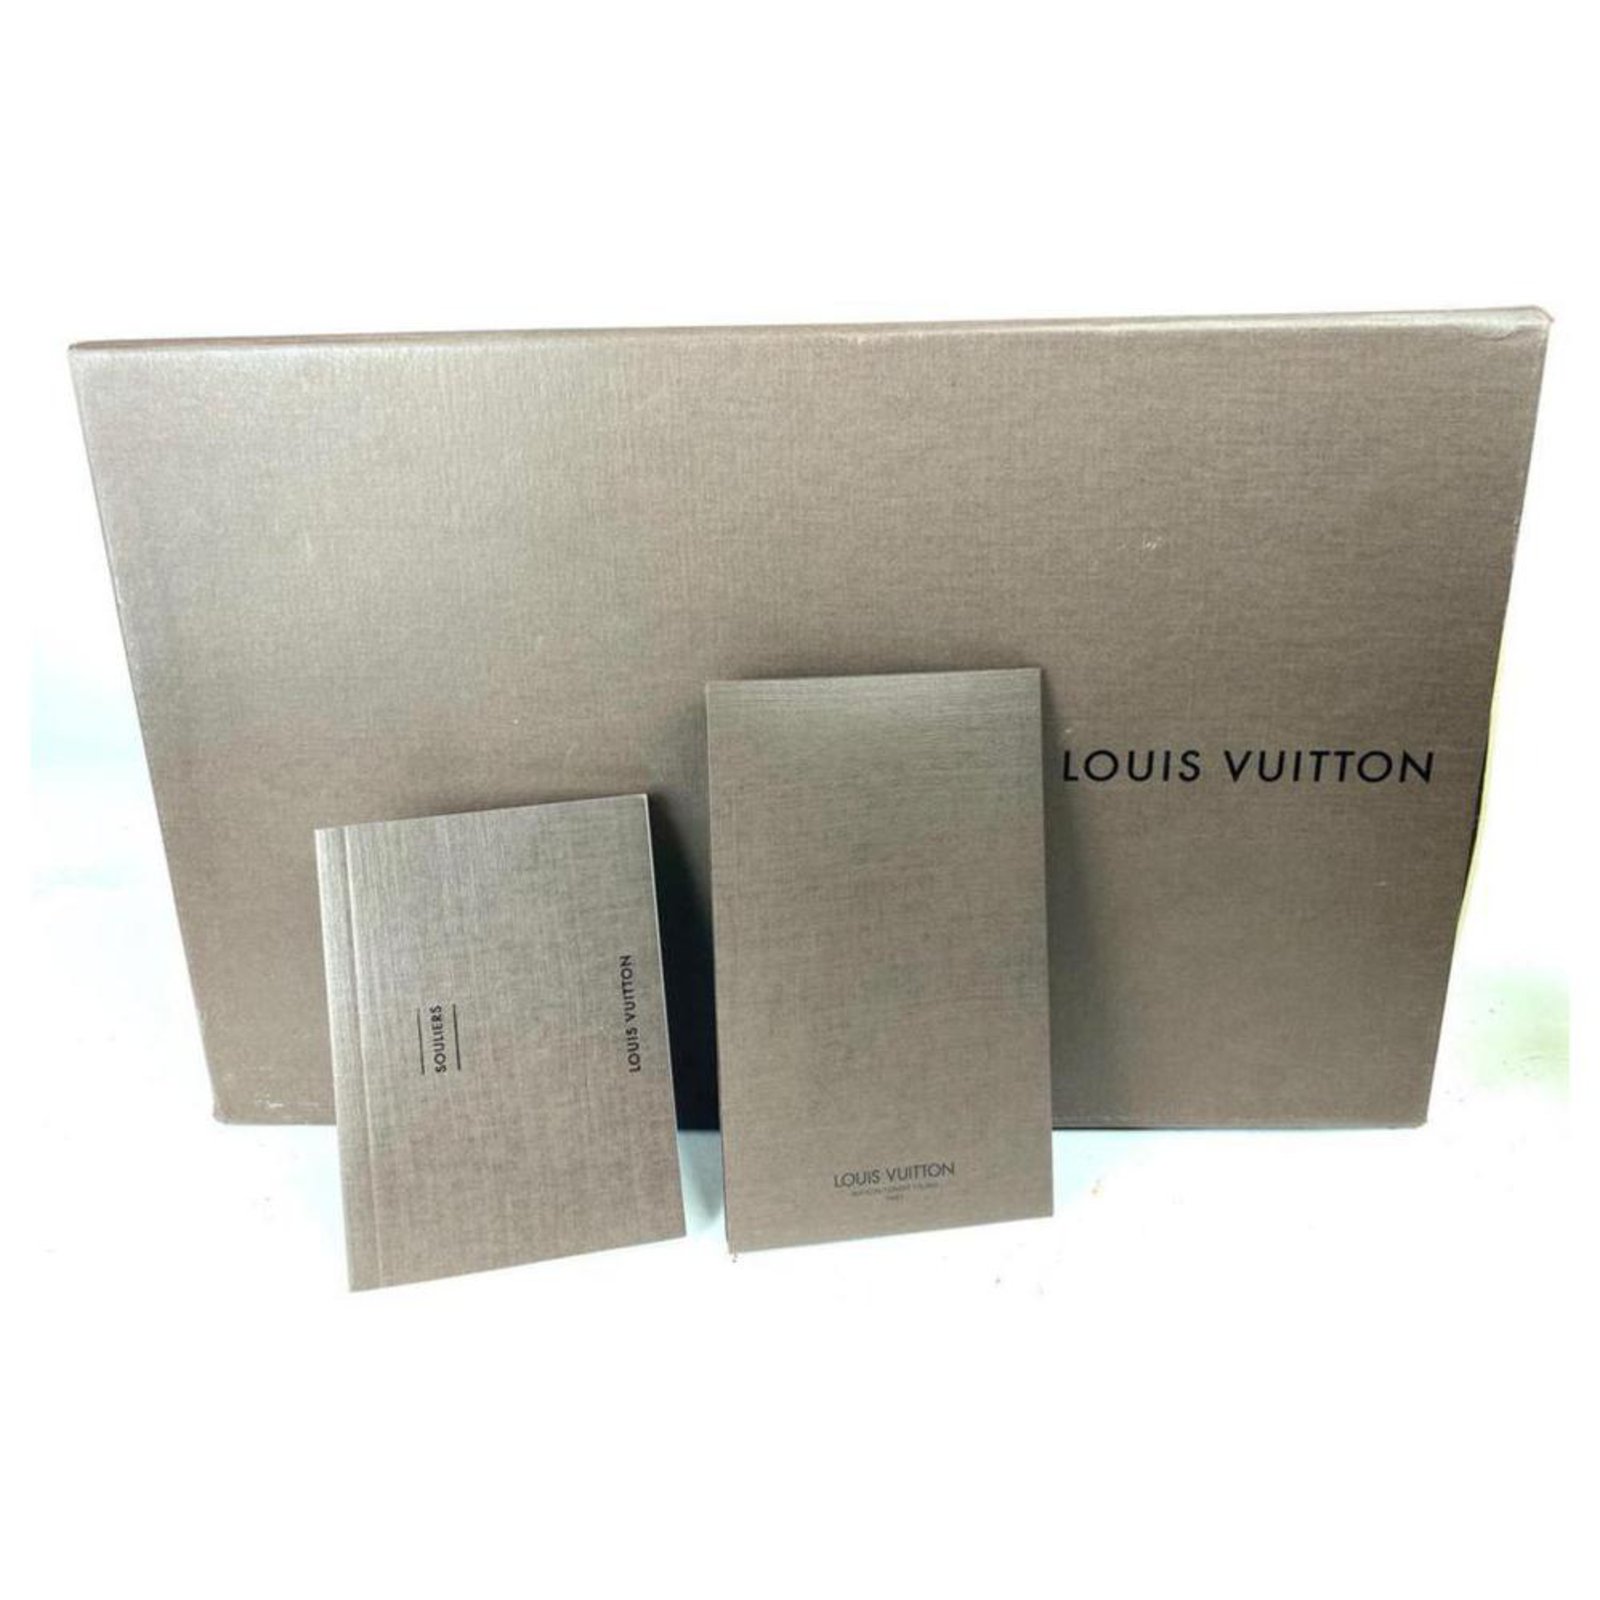 Louis Vuitton Falcon Stephen Sprouse Graffiti Sneaker men's 9.5 is